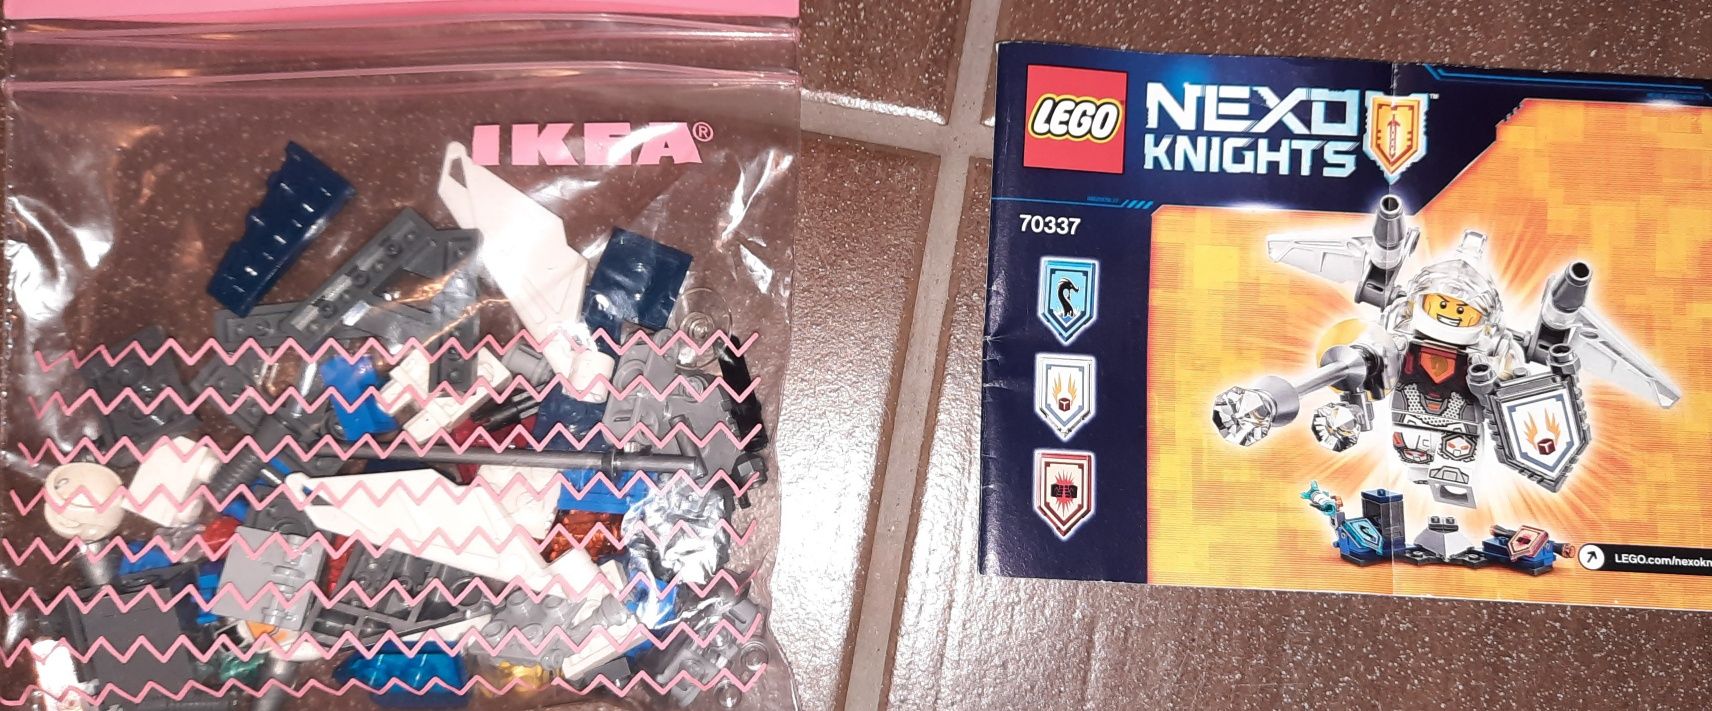 Lego nexo knigts 70337